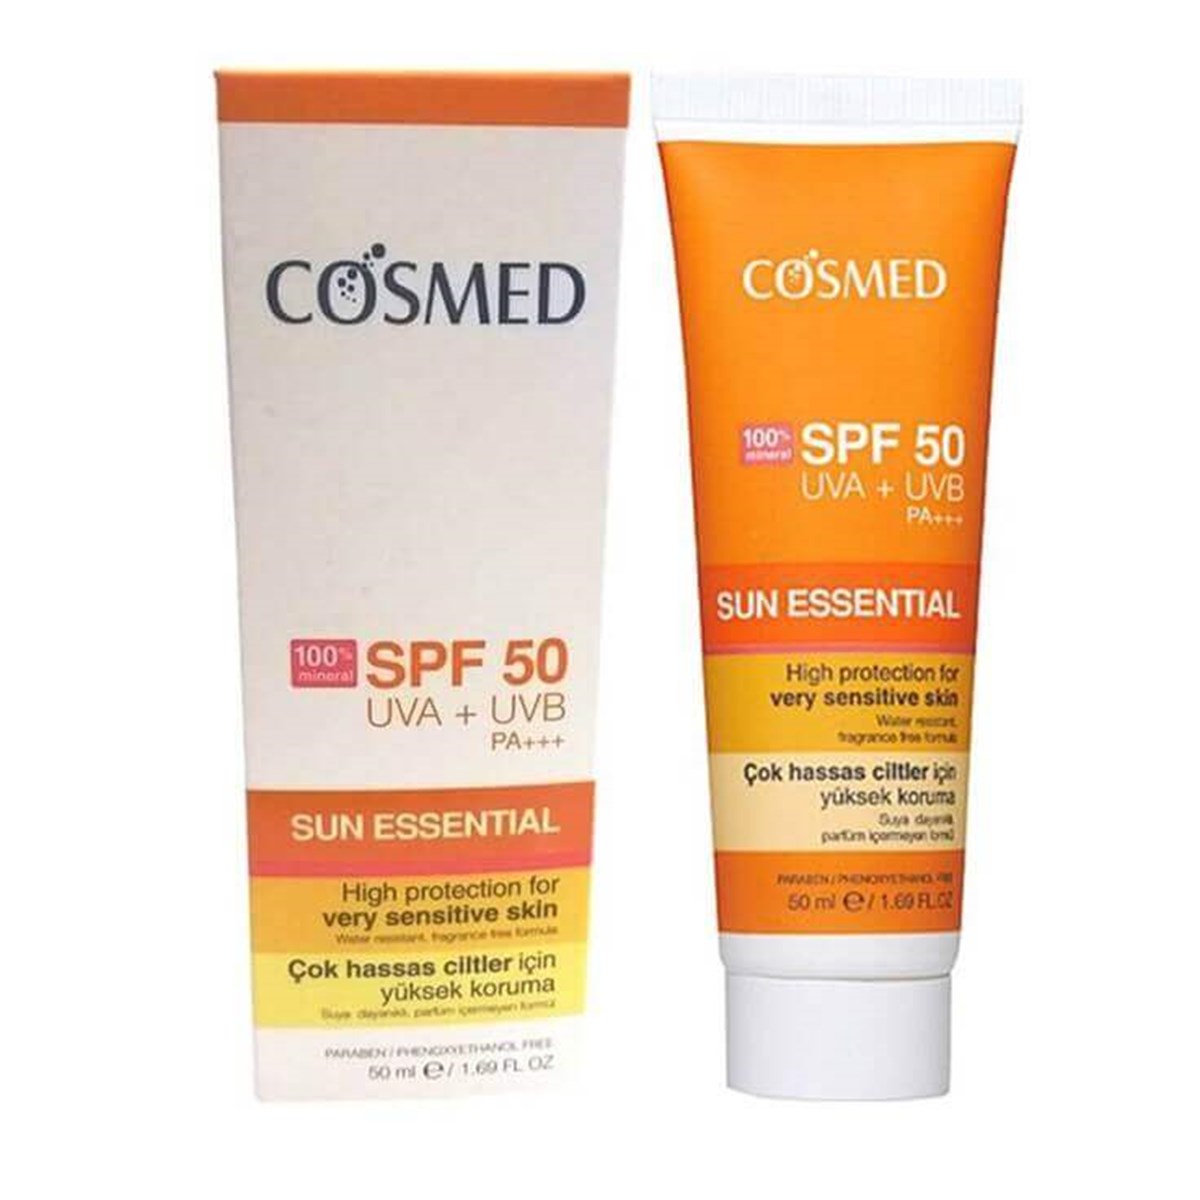 Cosmed Sun Essential Hassas Cilt Spf 50 50 ml Güneş Kremi Fiyatları |  Dermosiparis.com